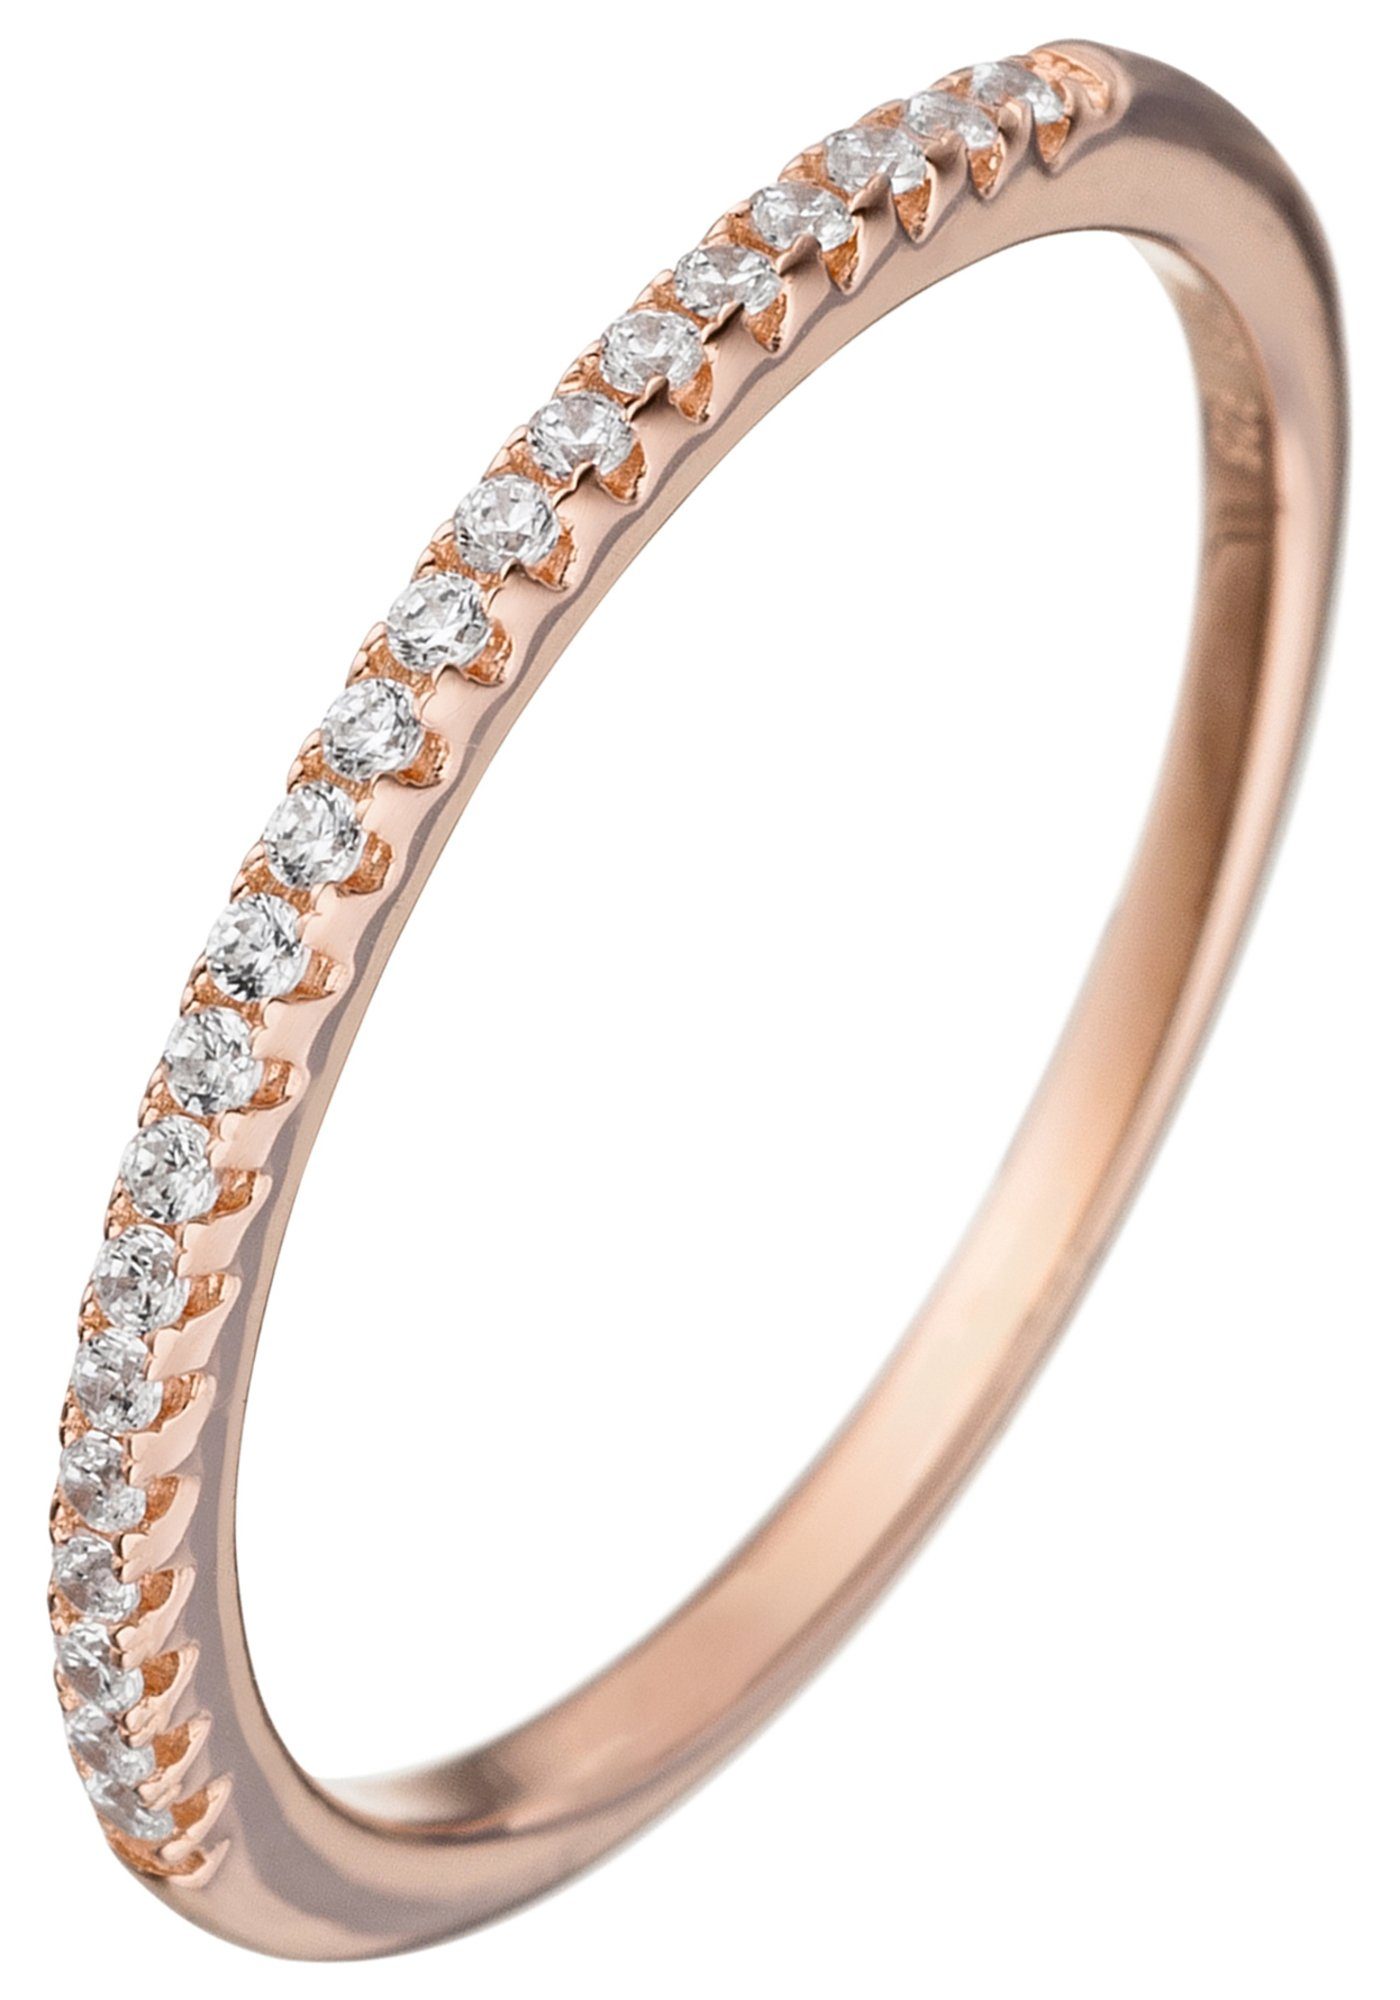 Presentski 925 Sterling Silber Ring Rosegold Vergoldet Love Ring mit Zirkonia Verlobung Ring für Damen